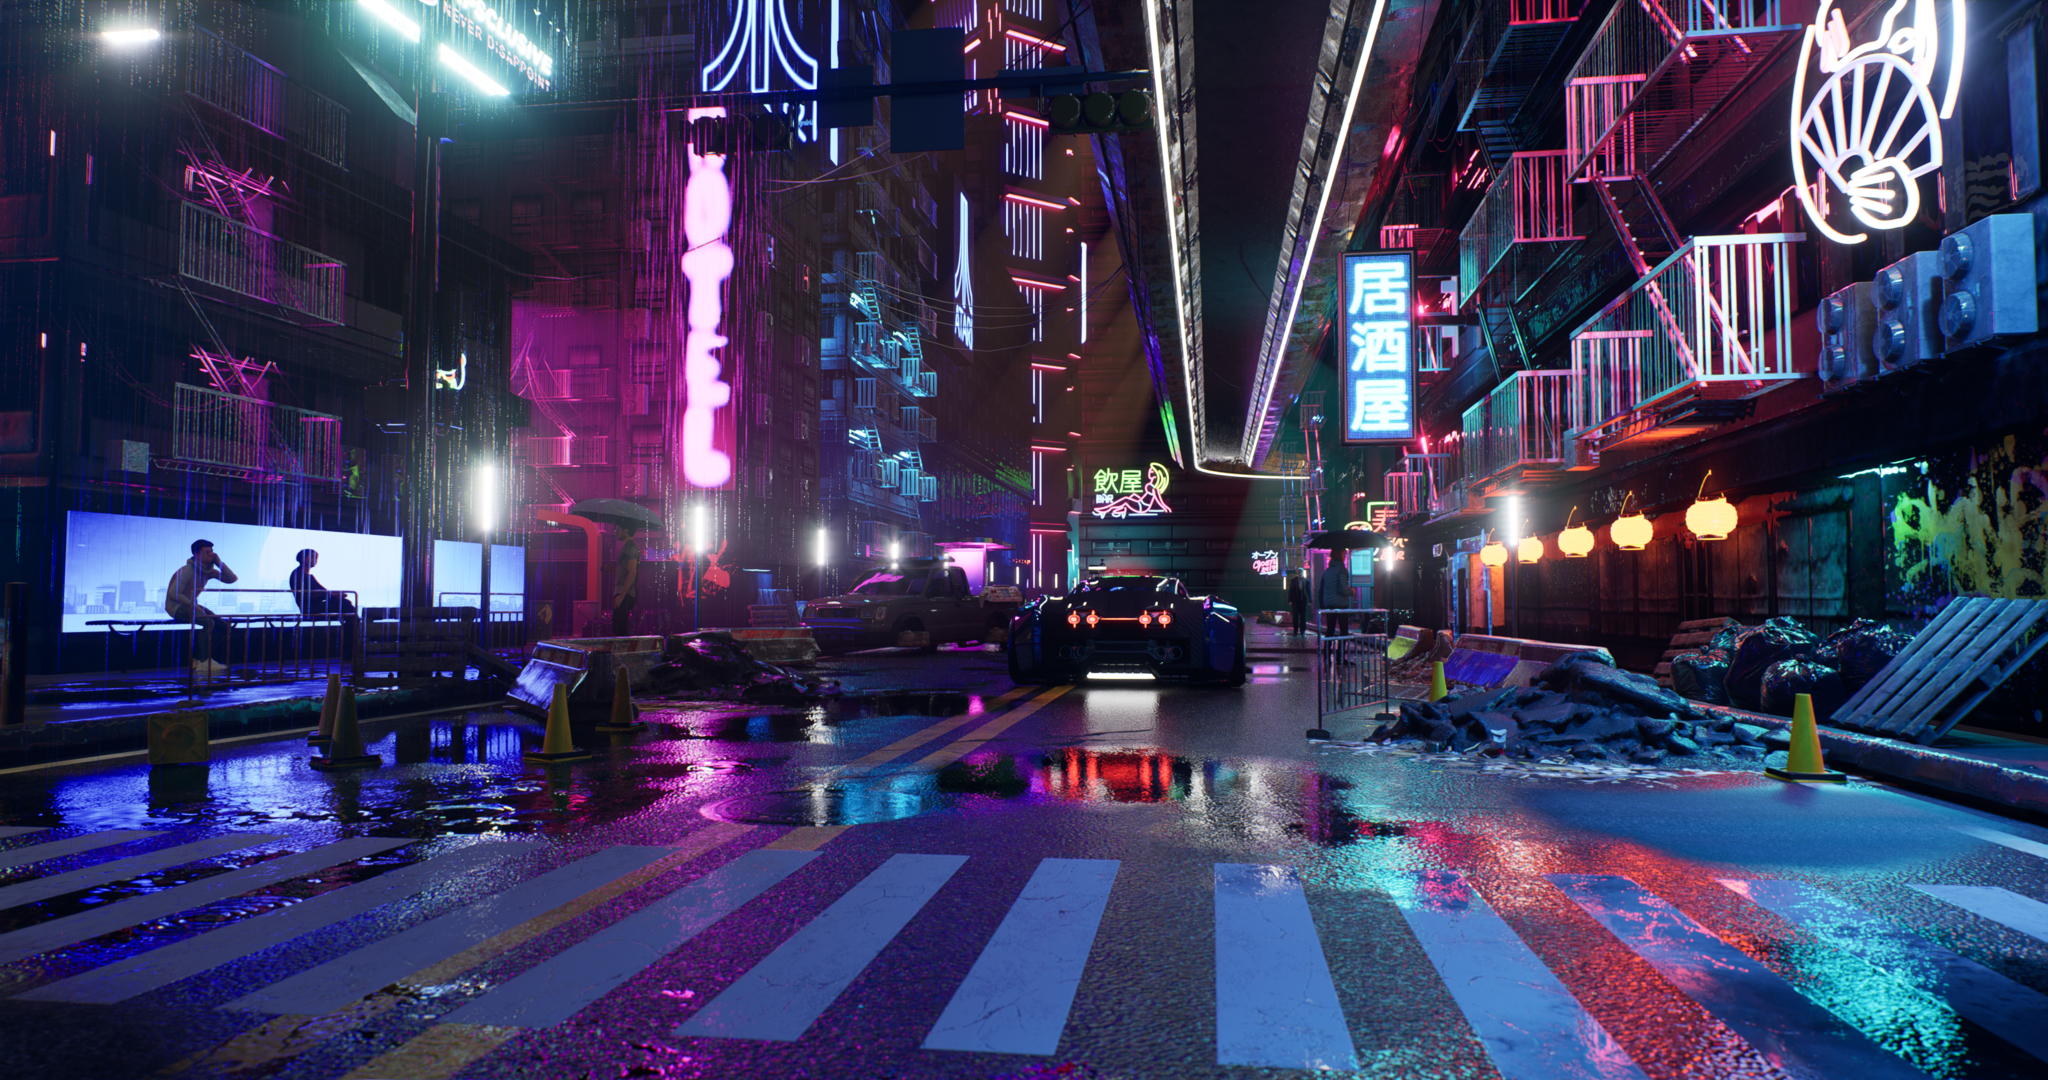 Cyberpunk Night City - Gallery - D5 RENDER FORUM